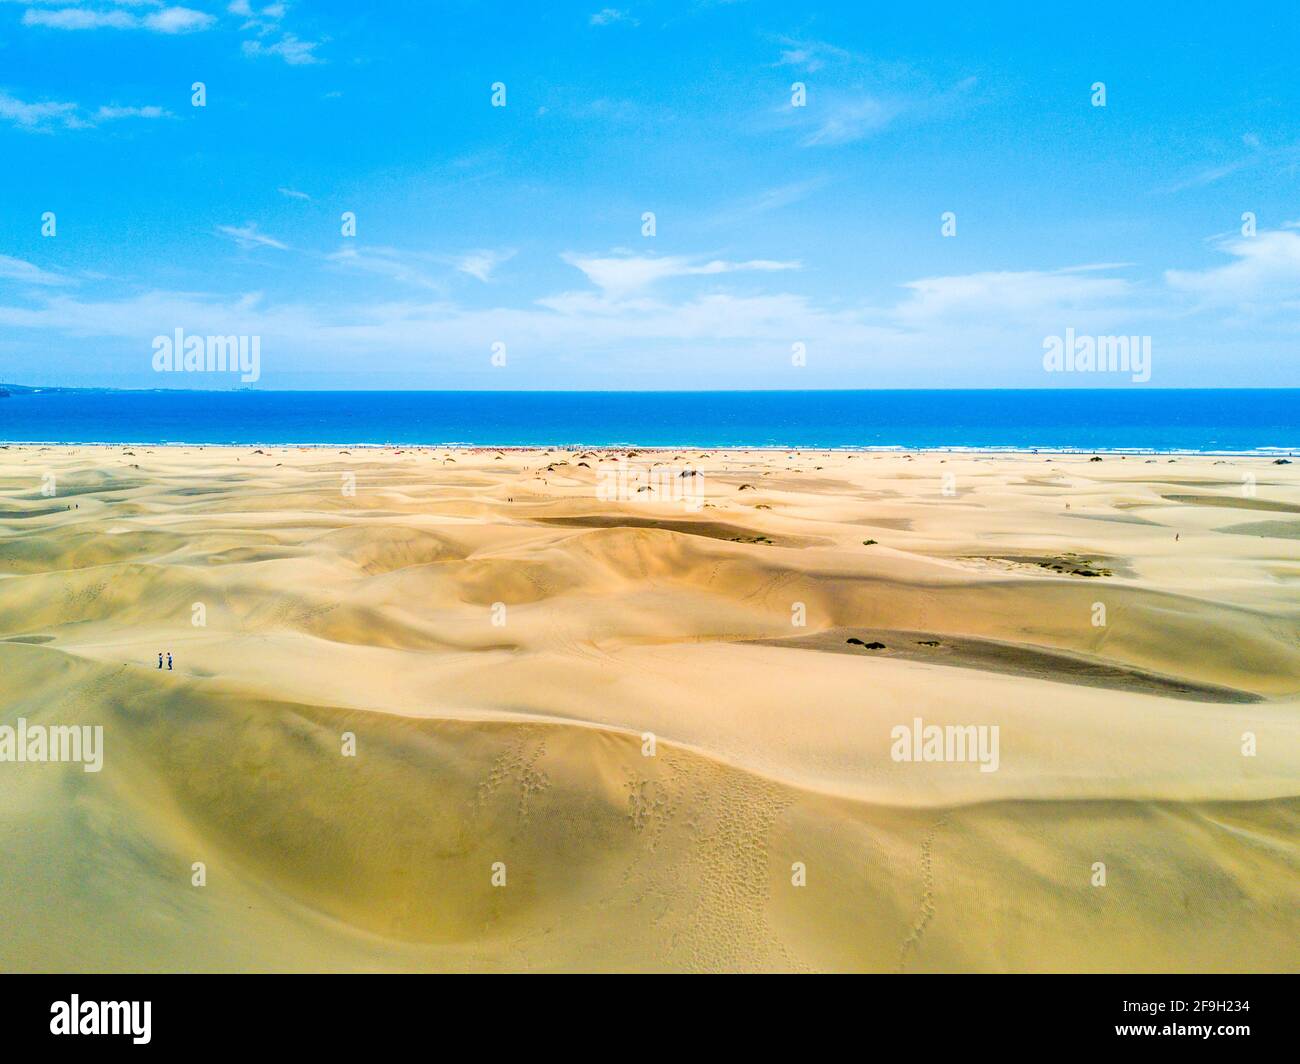 A bird's eyeshot of the scenic desert by the Atlantic ocean coast Stock Photo